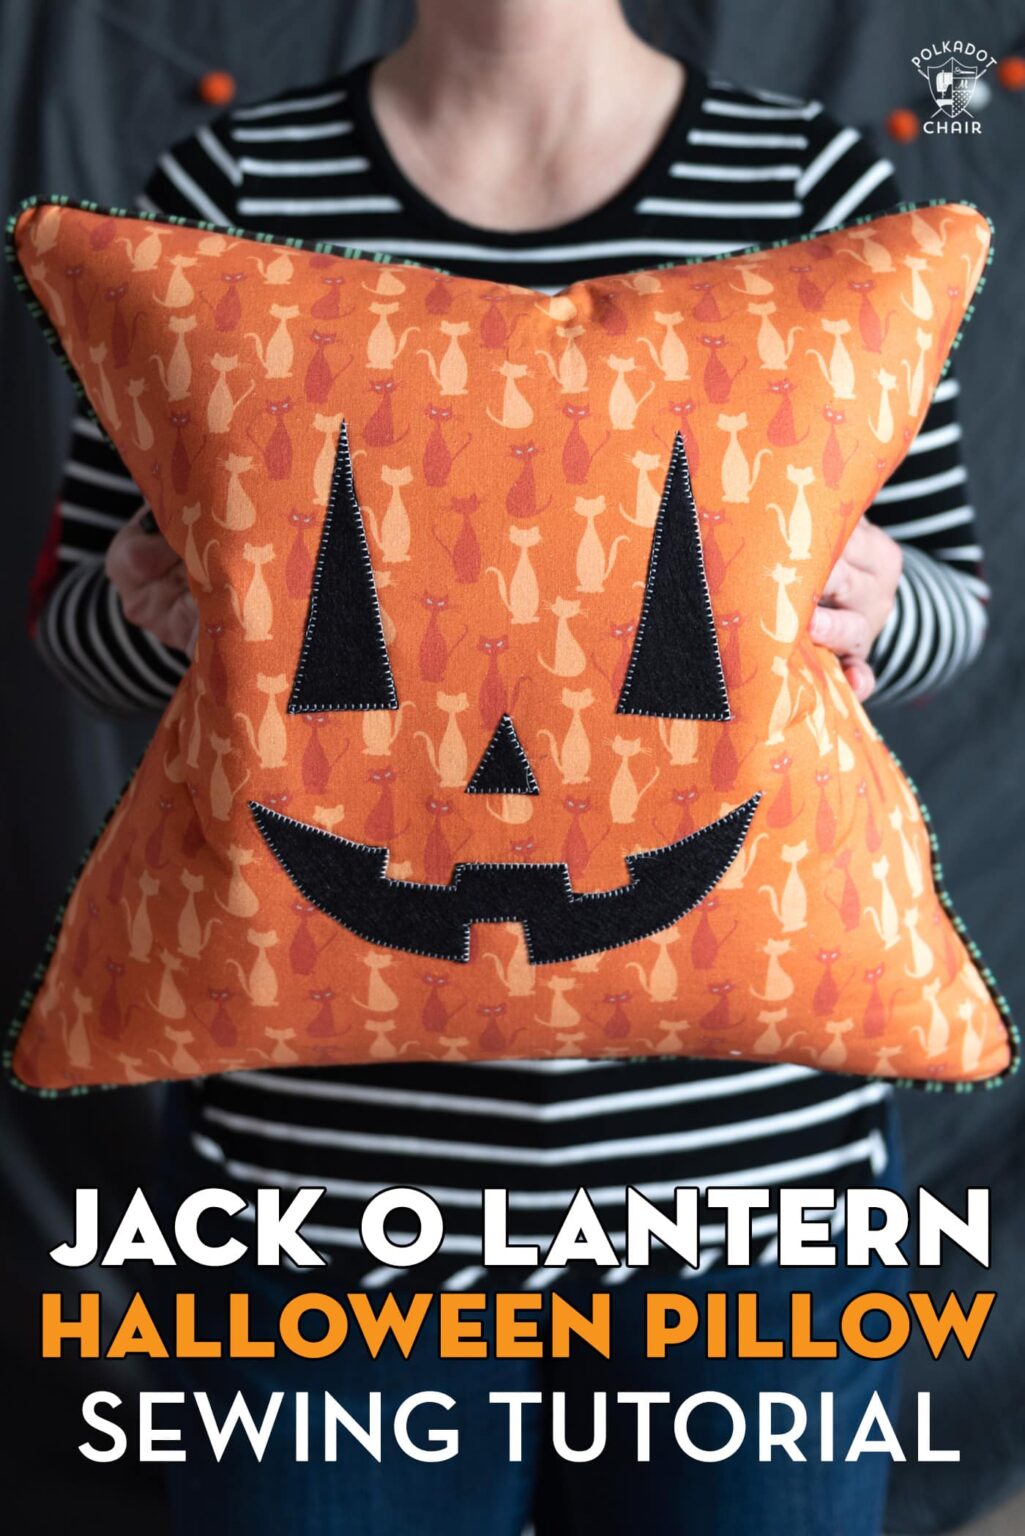 Jack O Lantern Halloween Pillow Sewing Pattern The Polka Dot Chair 3437